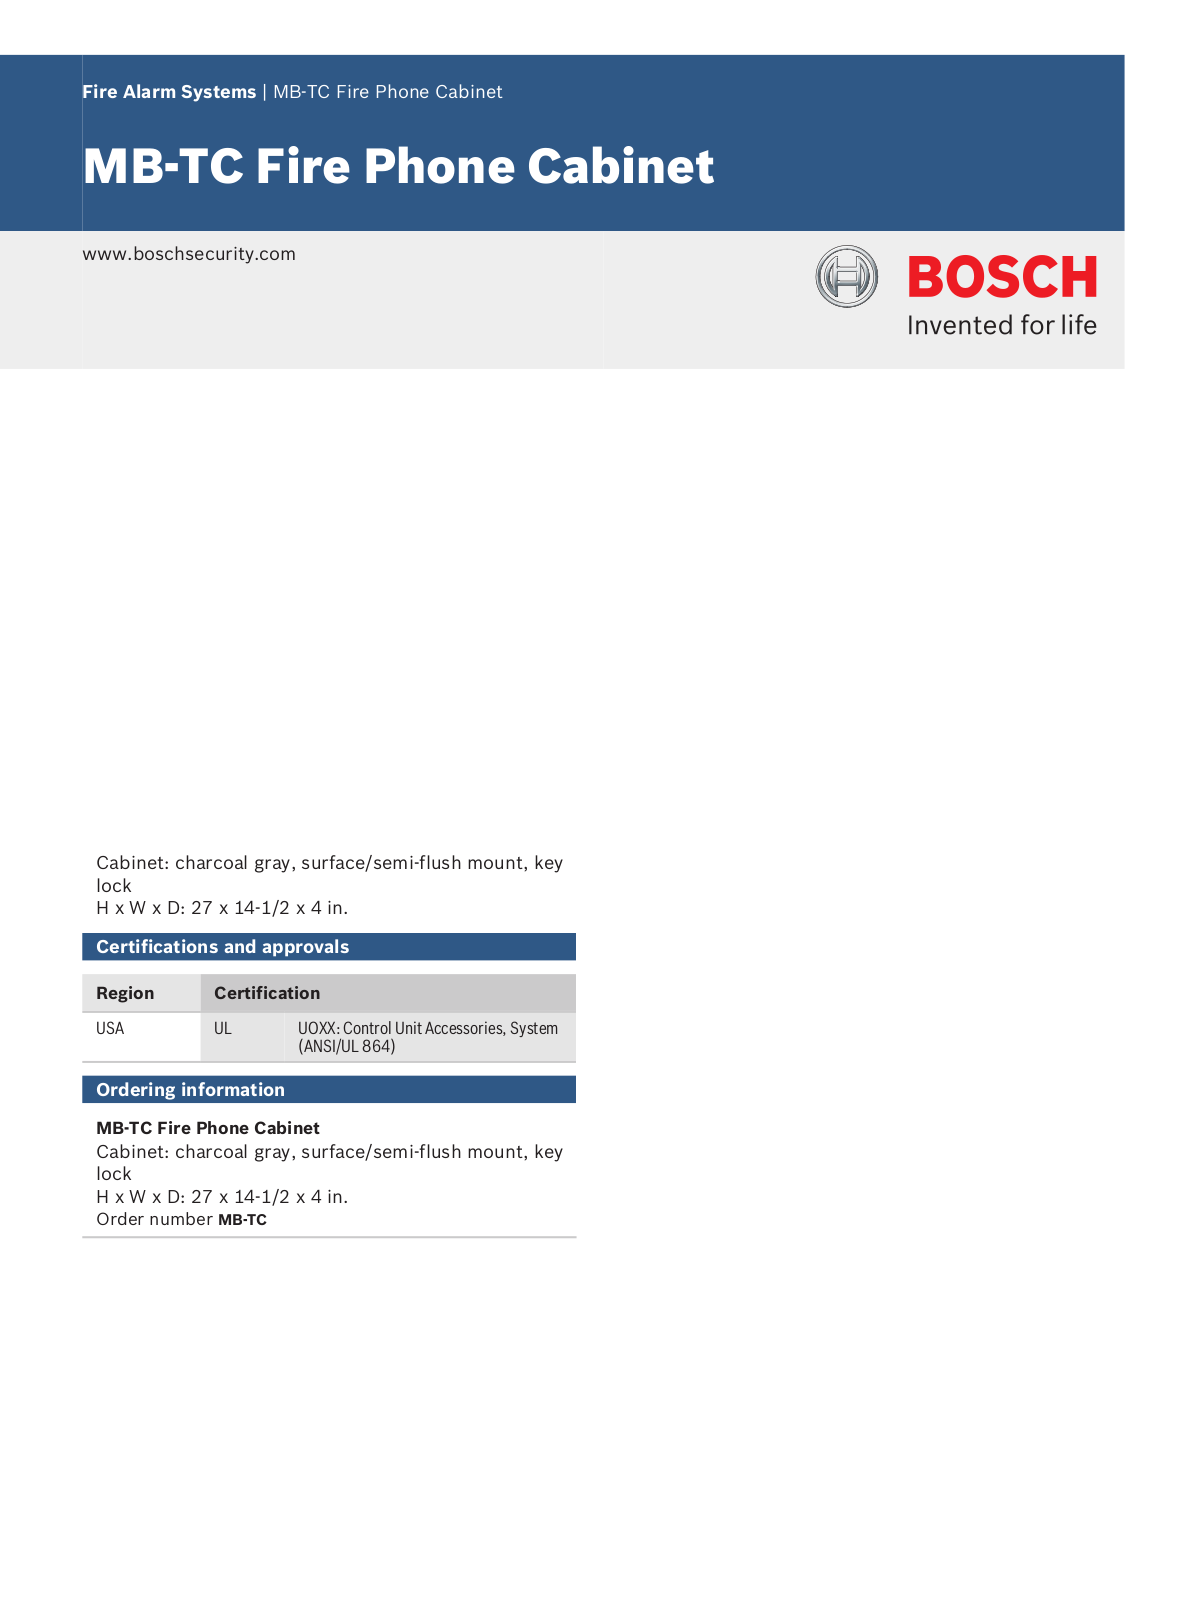 Bosch MB-TC Specsheet